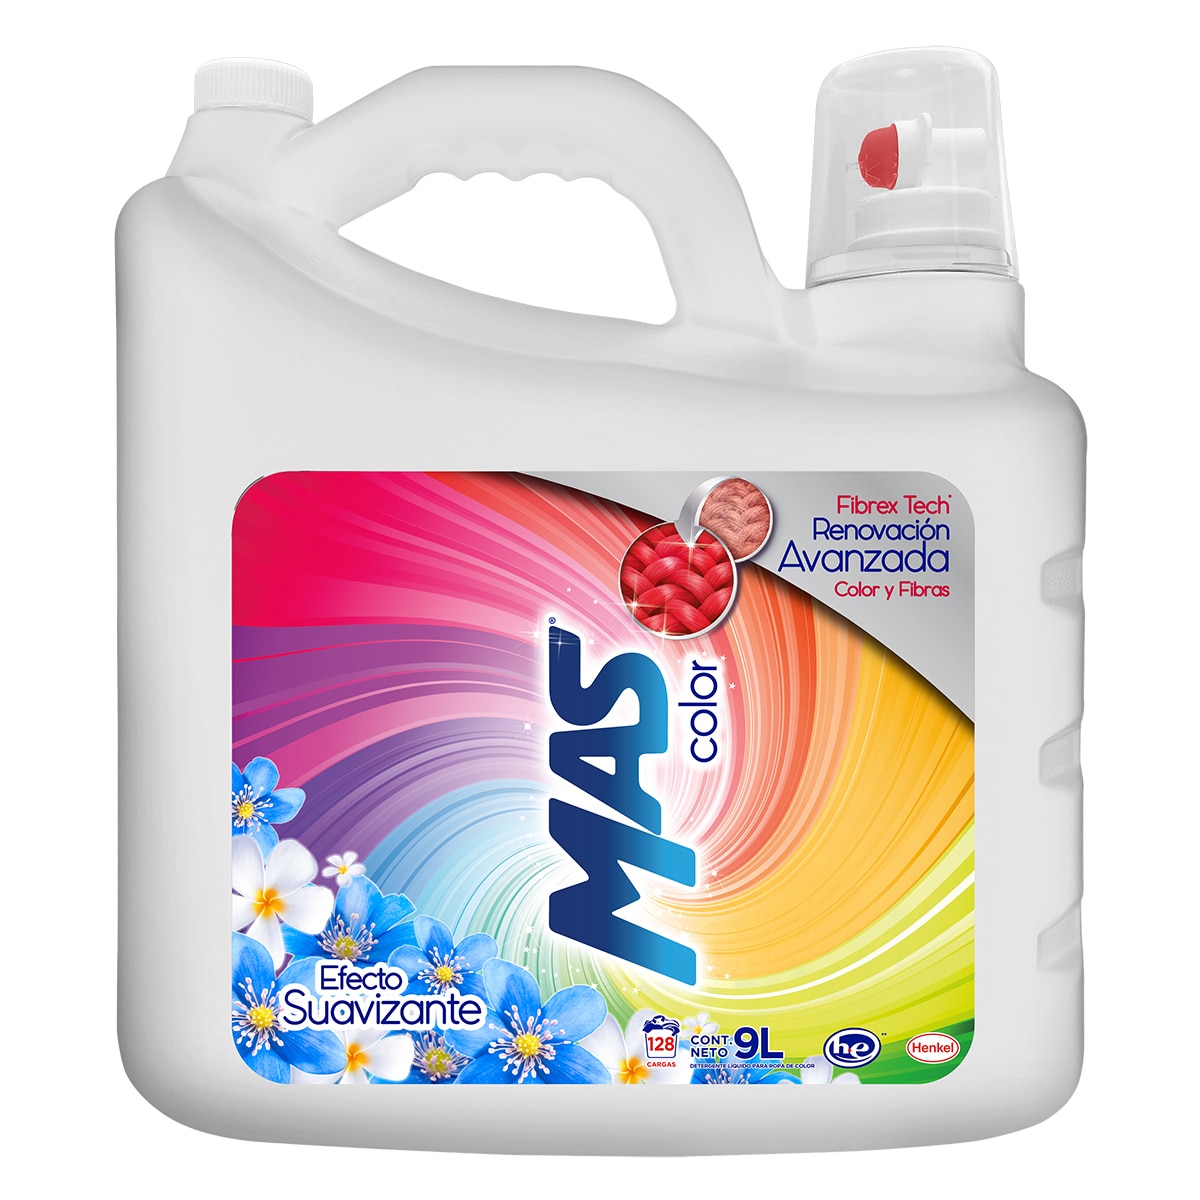 Dreft Detergente para Ropa de Bebé 4.4 l